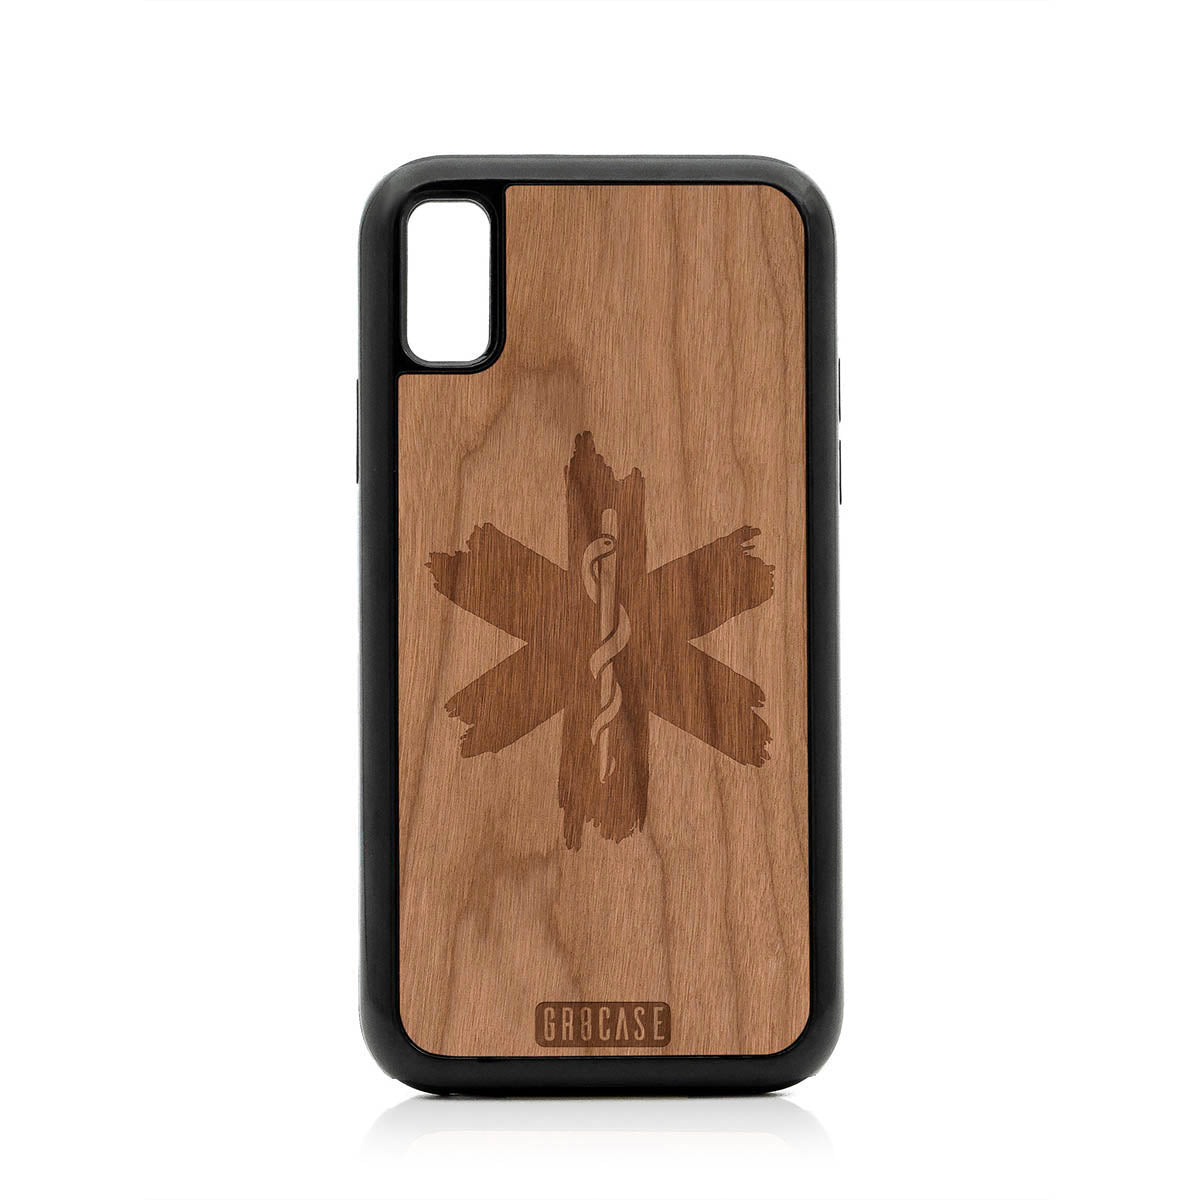 EMT Design Wood Case For iPhone X/XS by GR8CASE